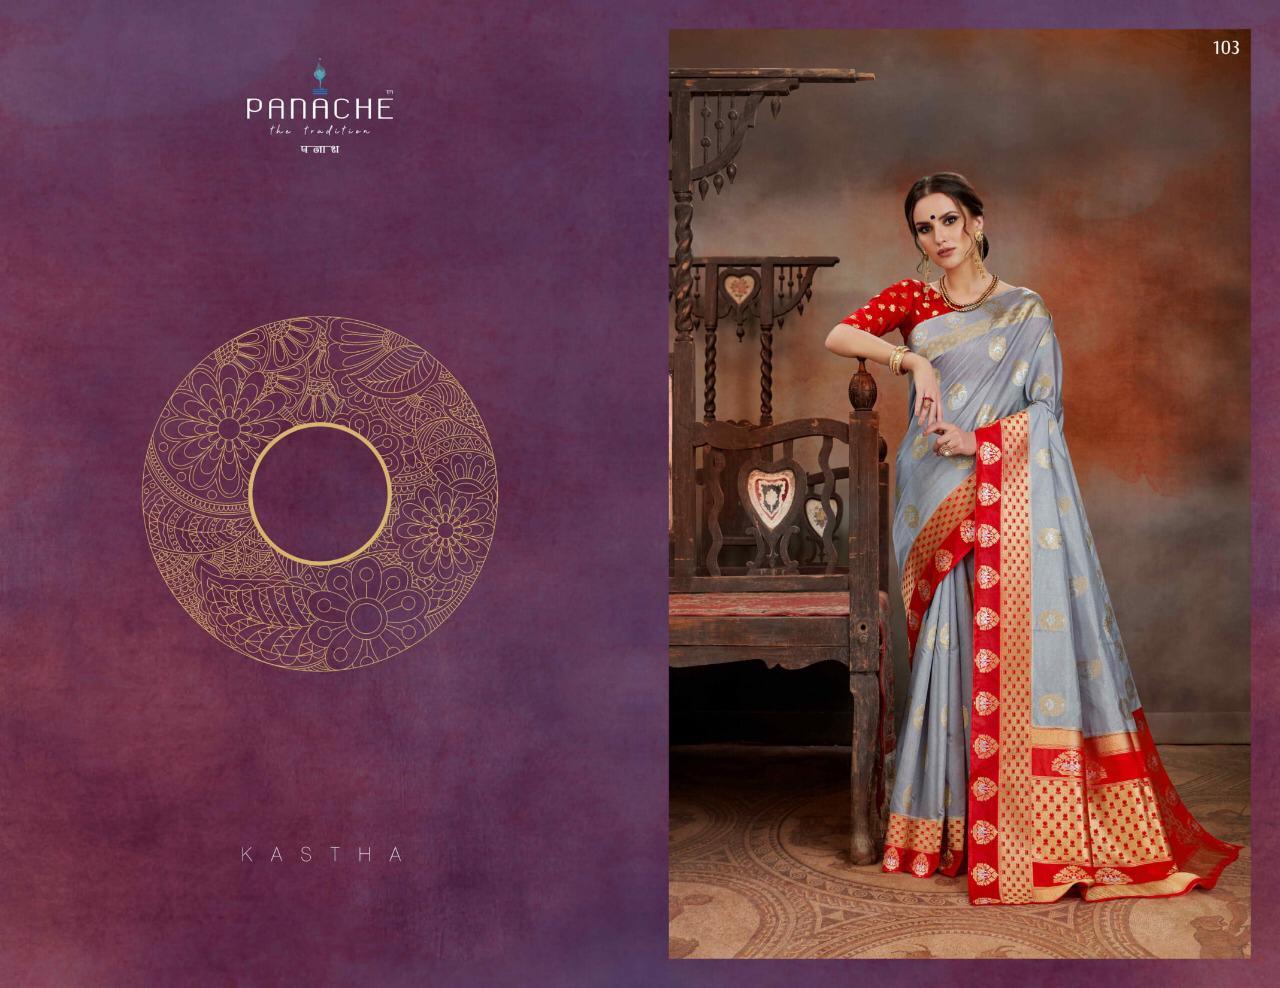 Silk Designer Saree